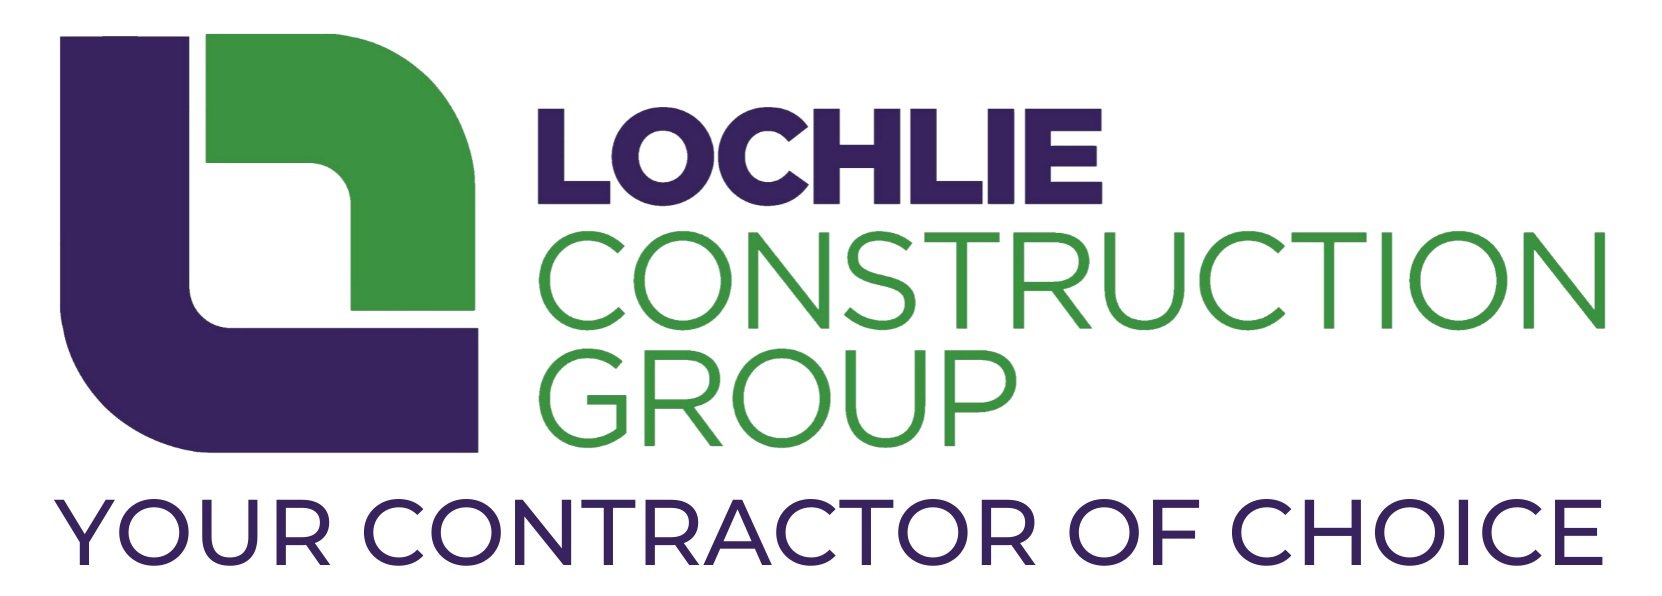 Lochlie Construction Group Logo w Strapling (1).jpg